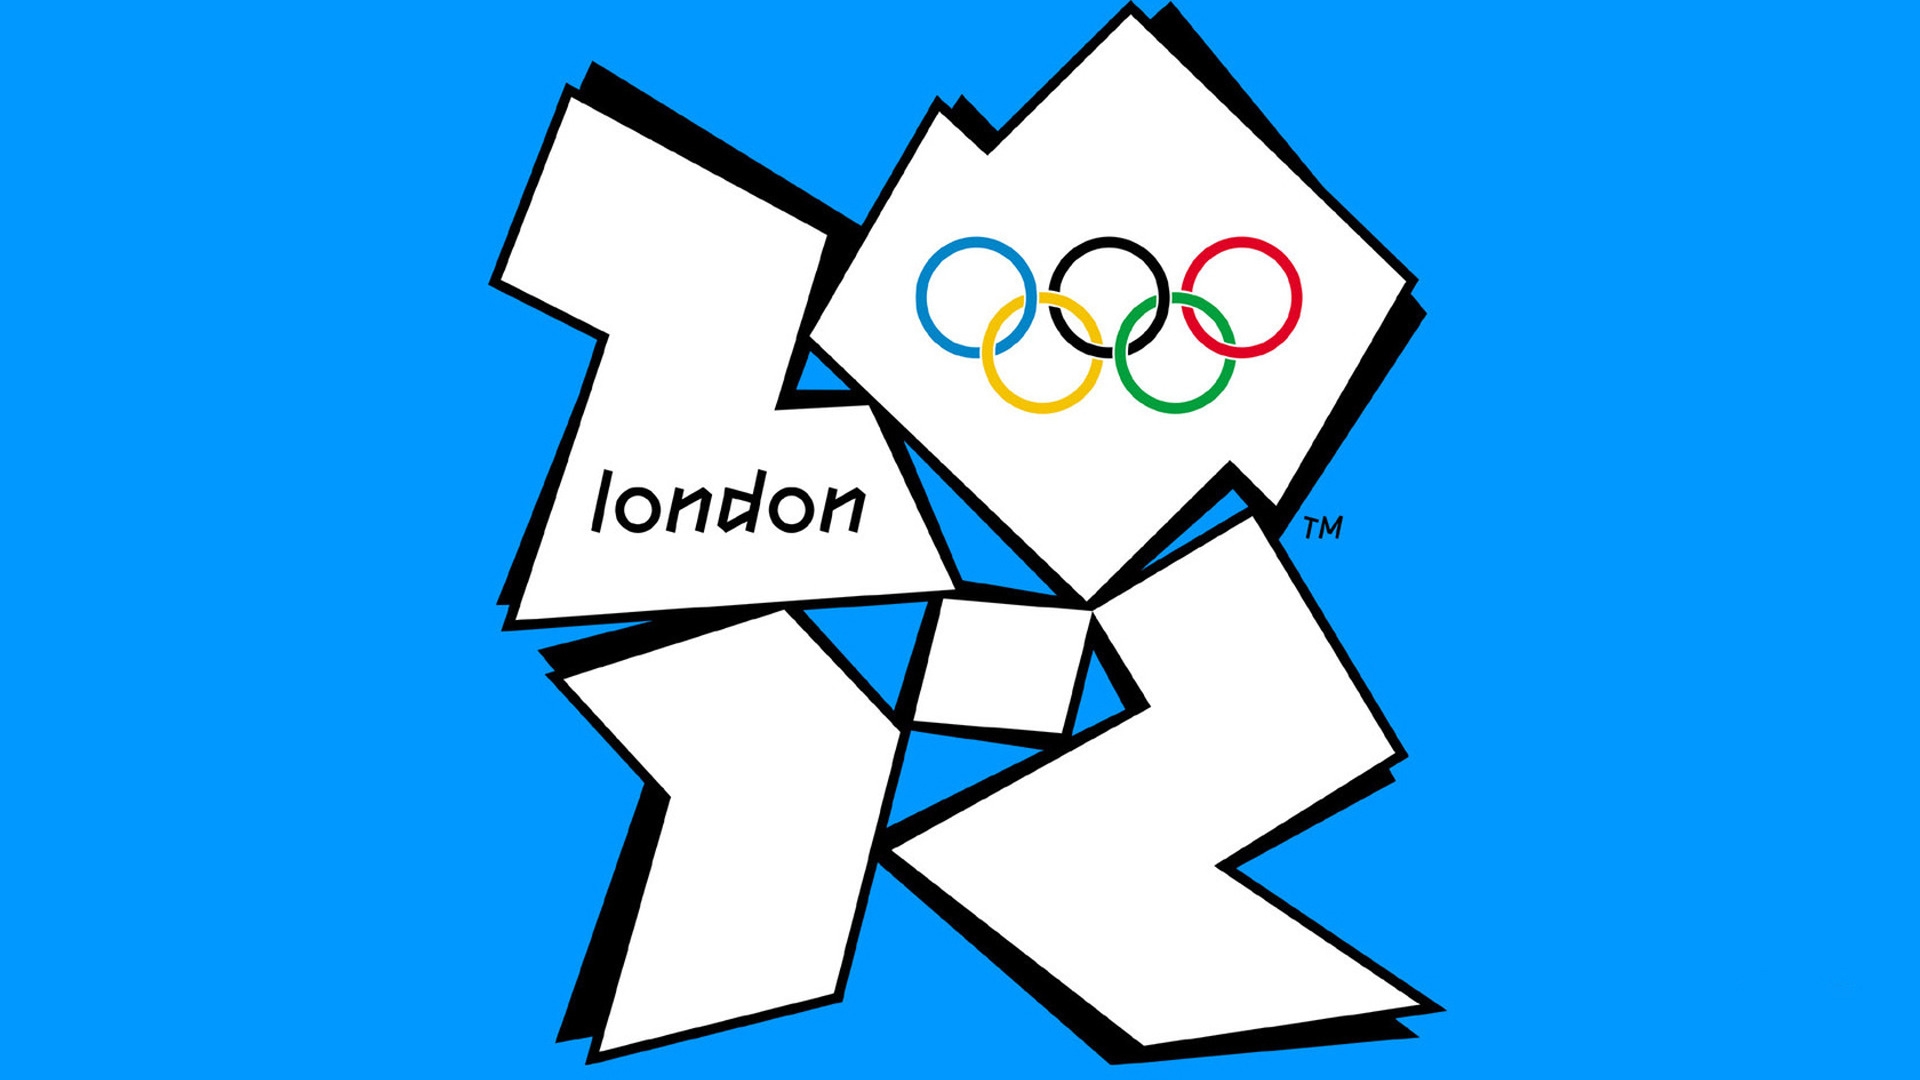 London 2012 Olympics Logo for 1920 x 1080 HDTV 1080p resolution